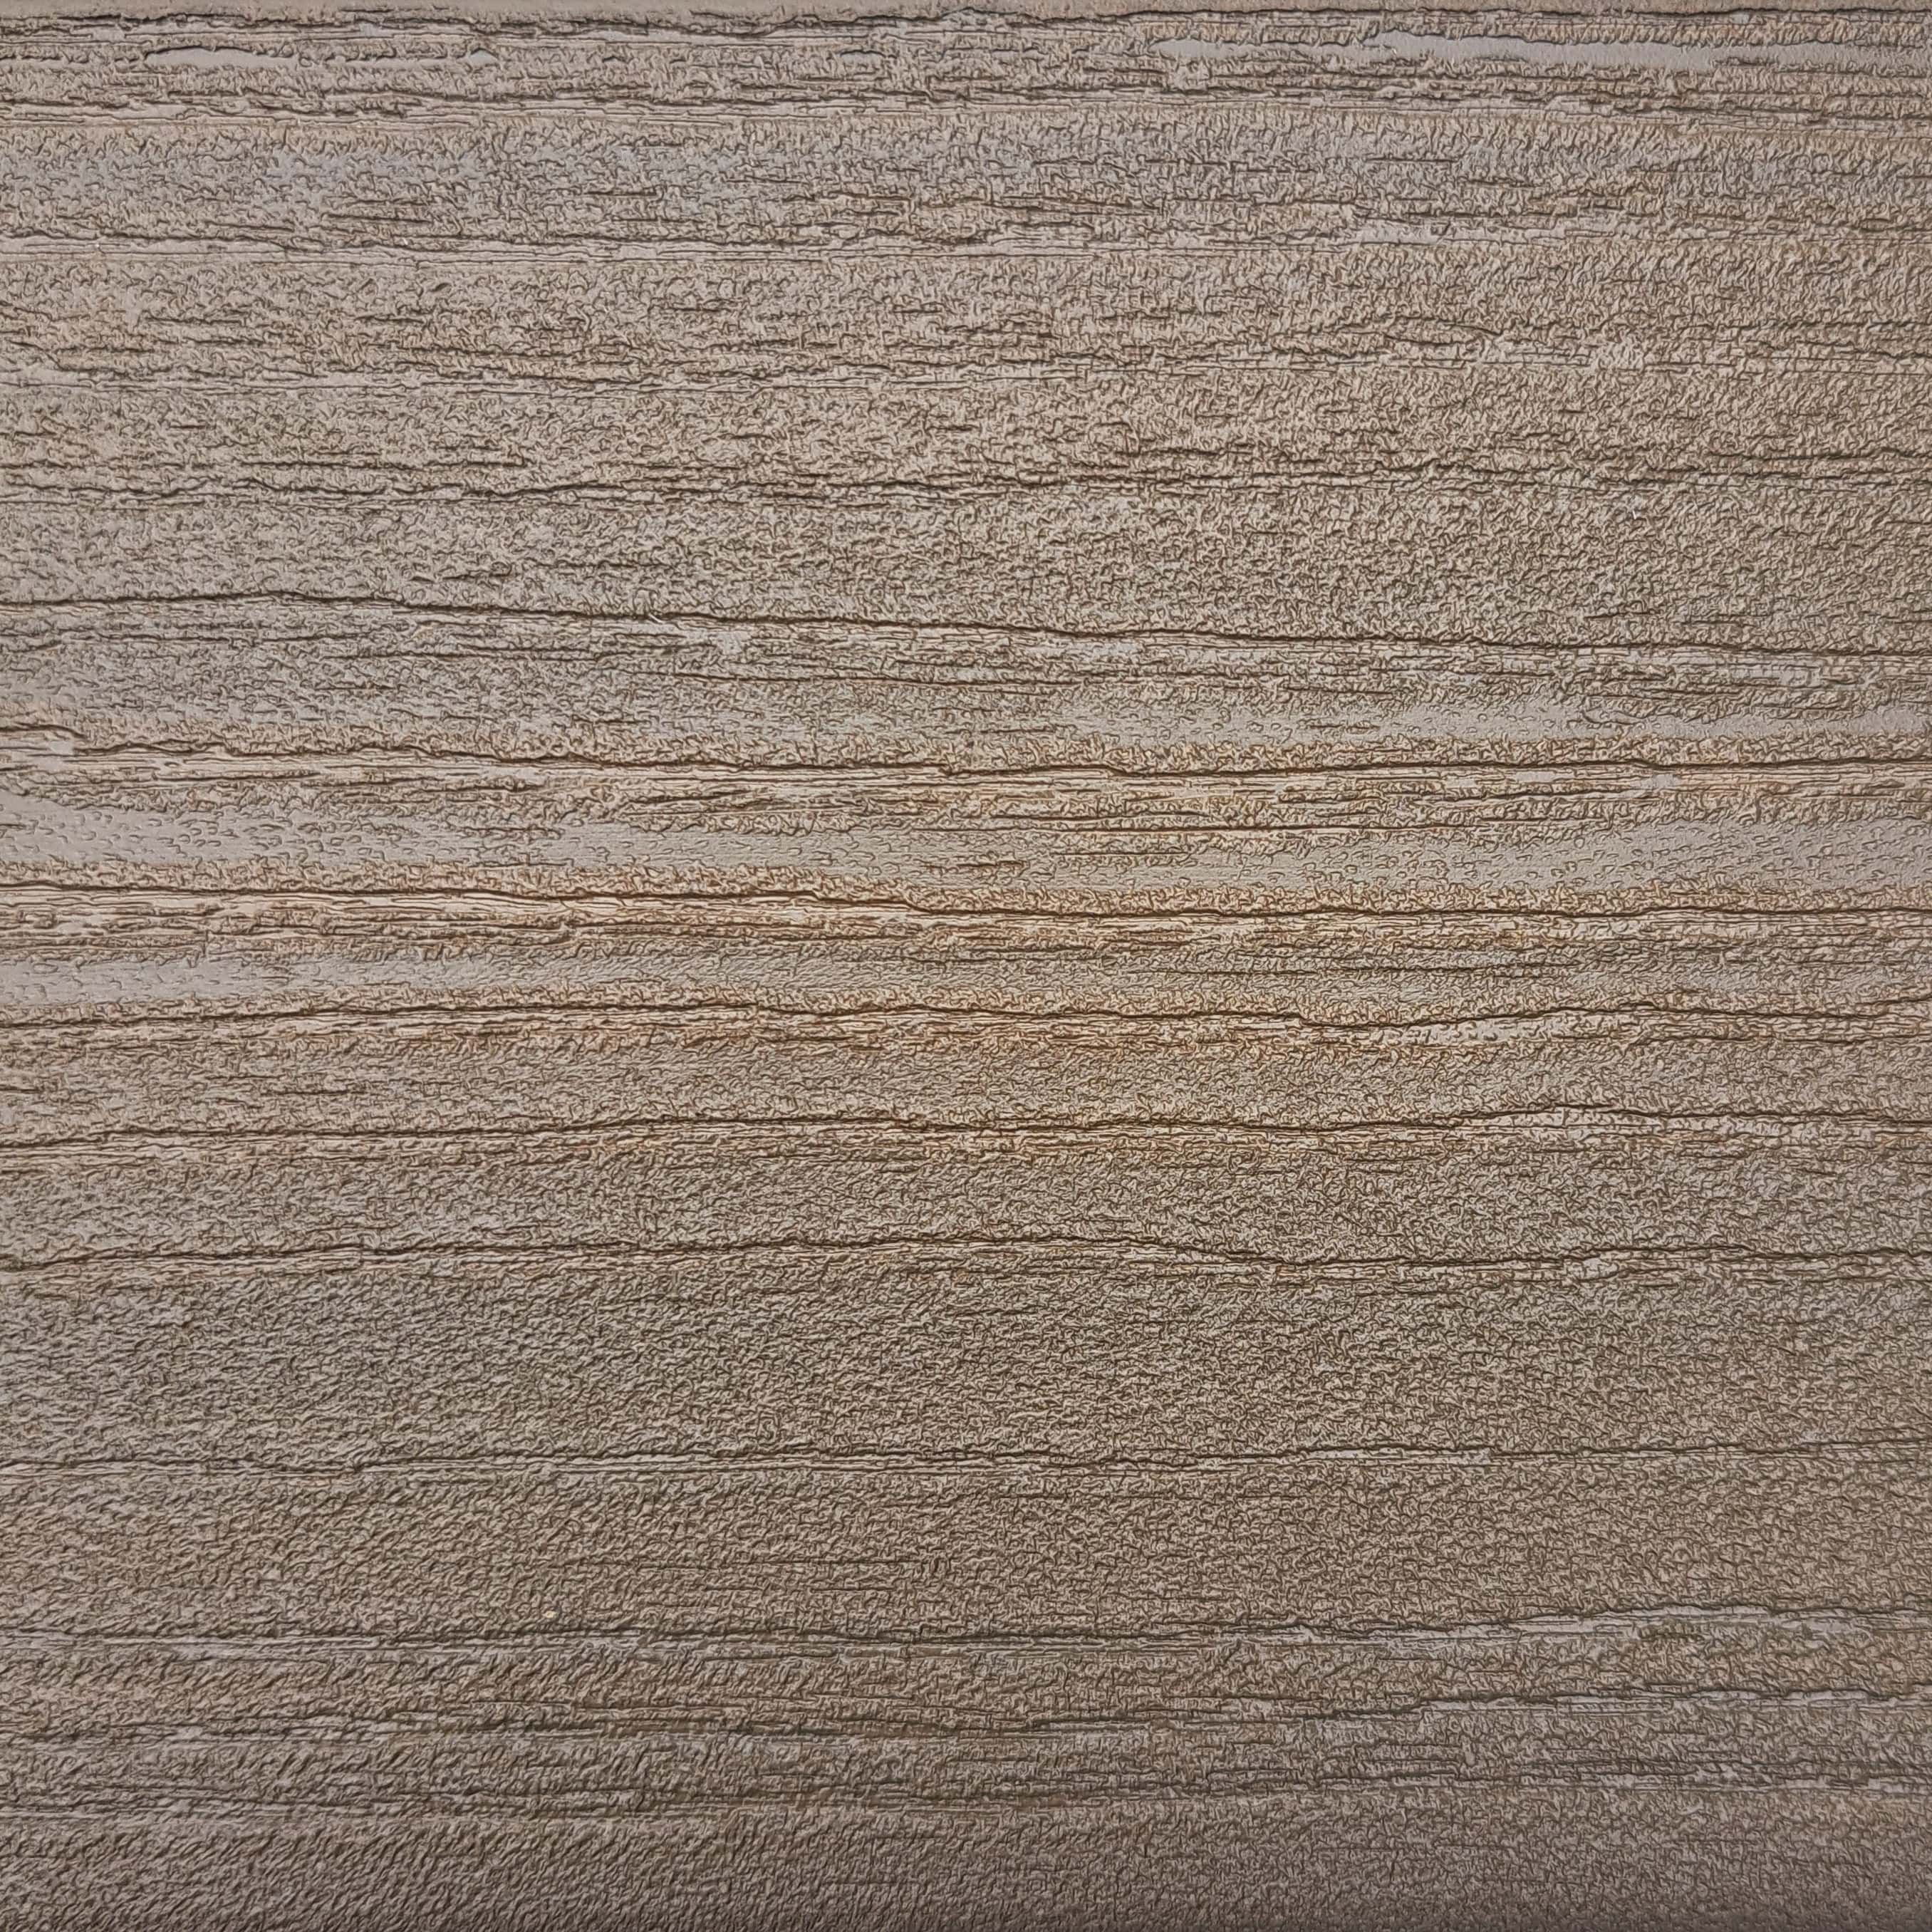 Texture of Fiberon Brownstone Decking